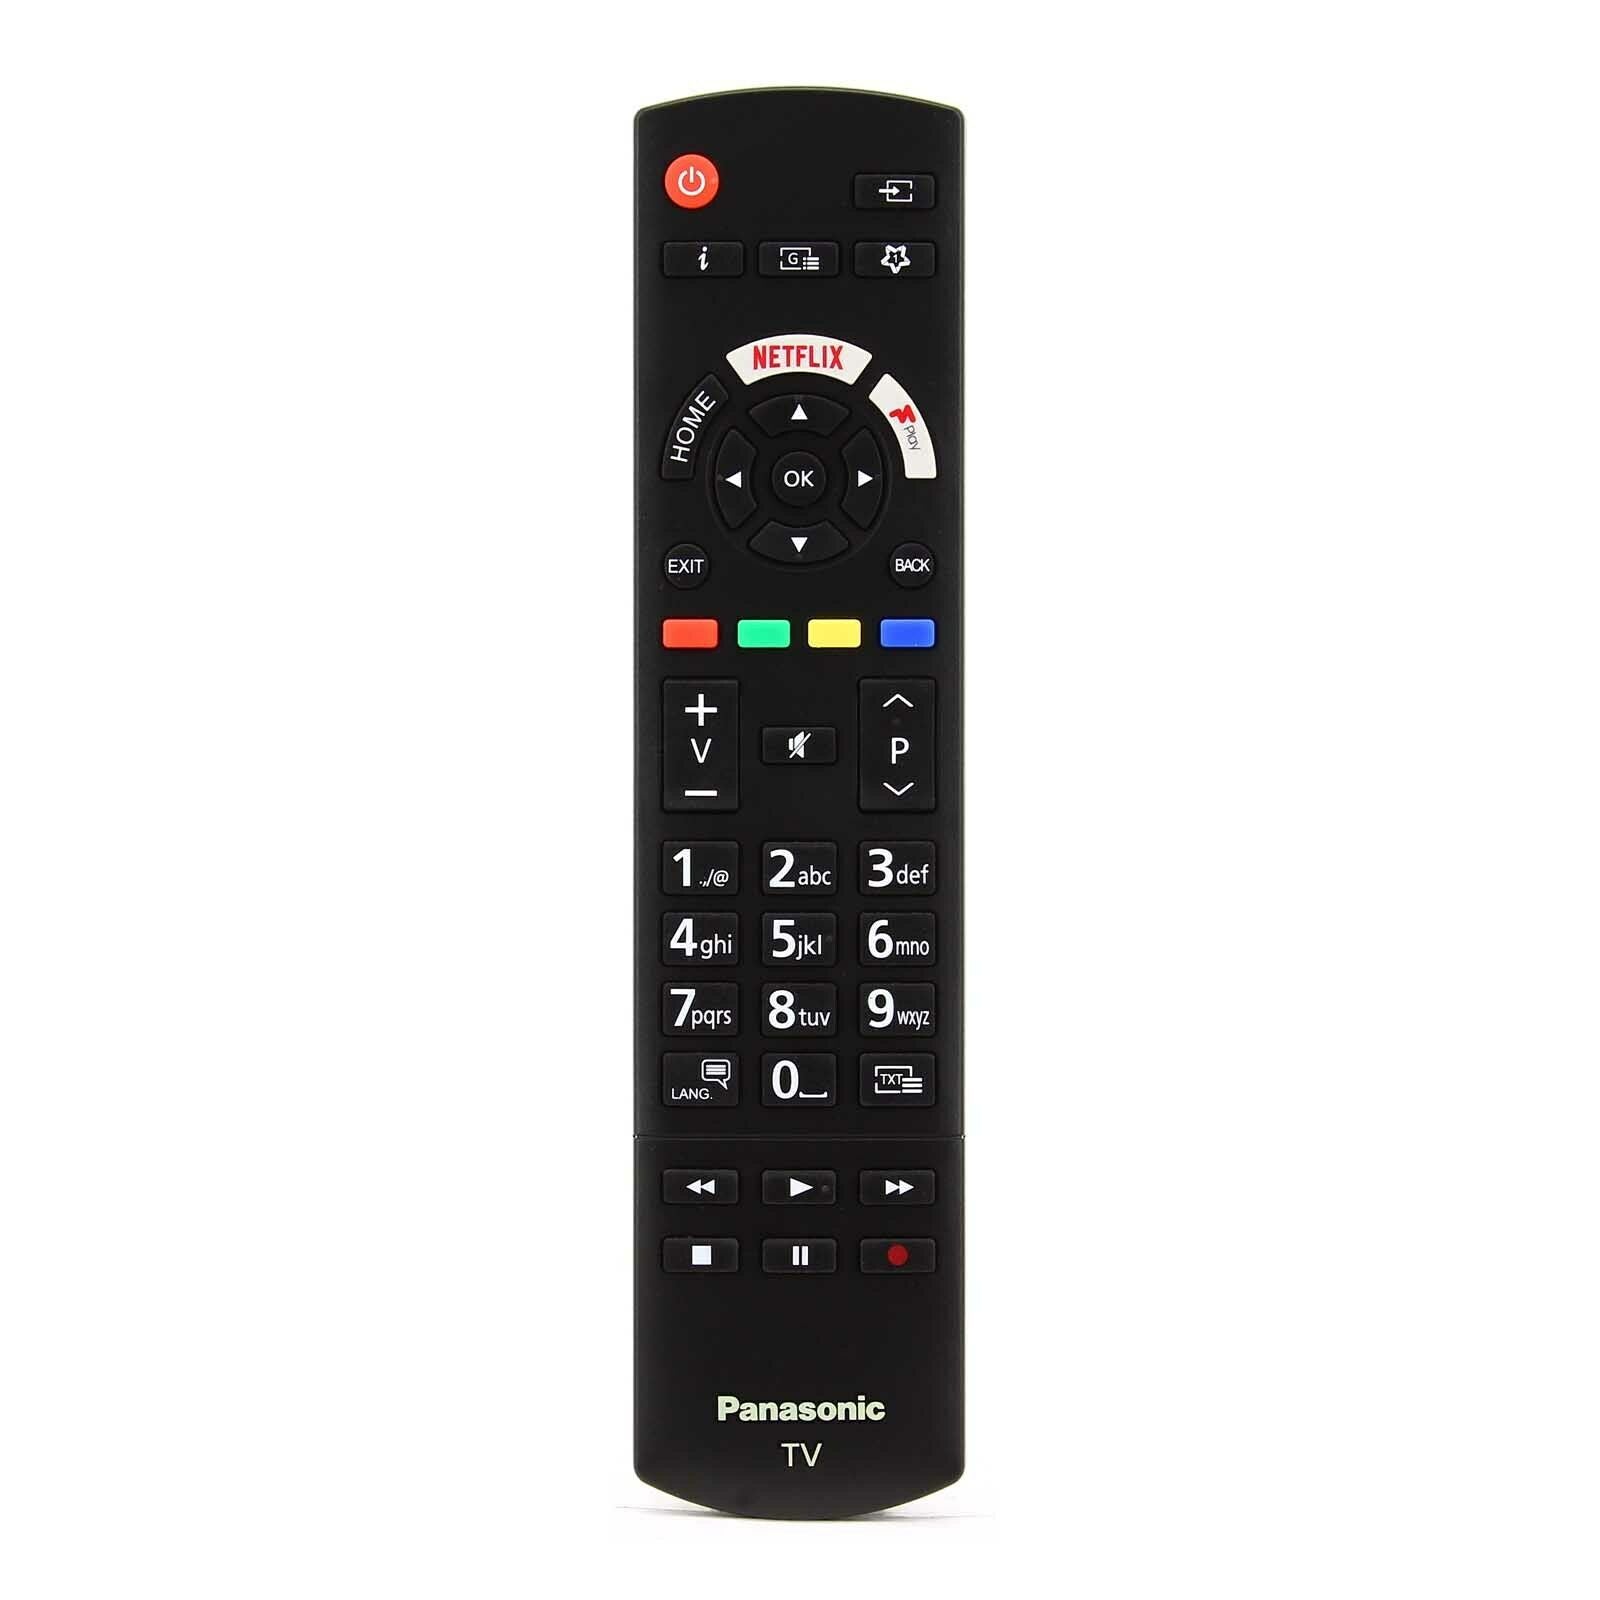 Panasonic RC42129 Remote Control, Black